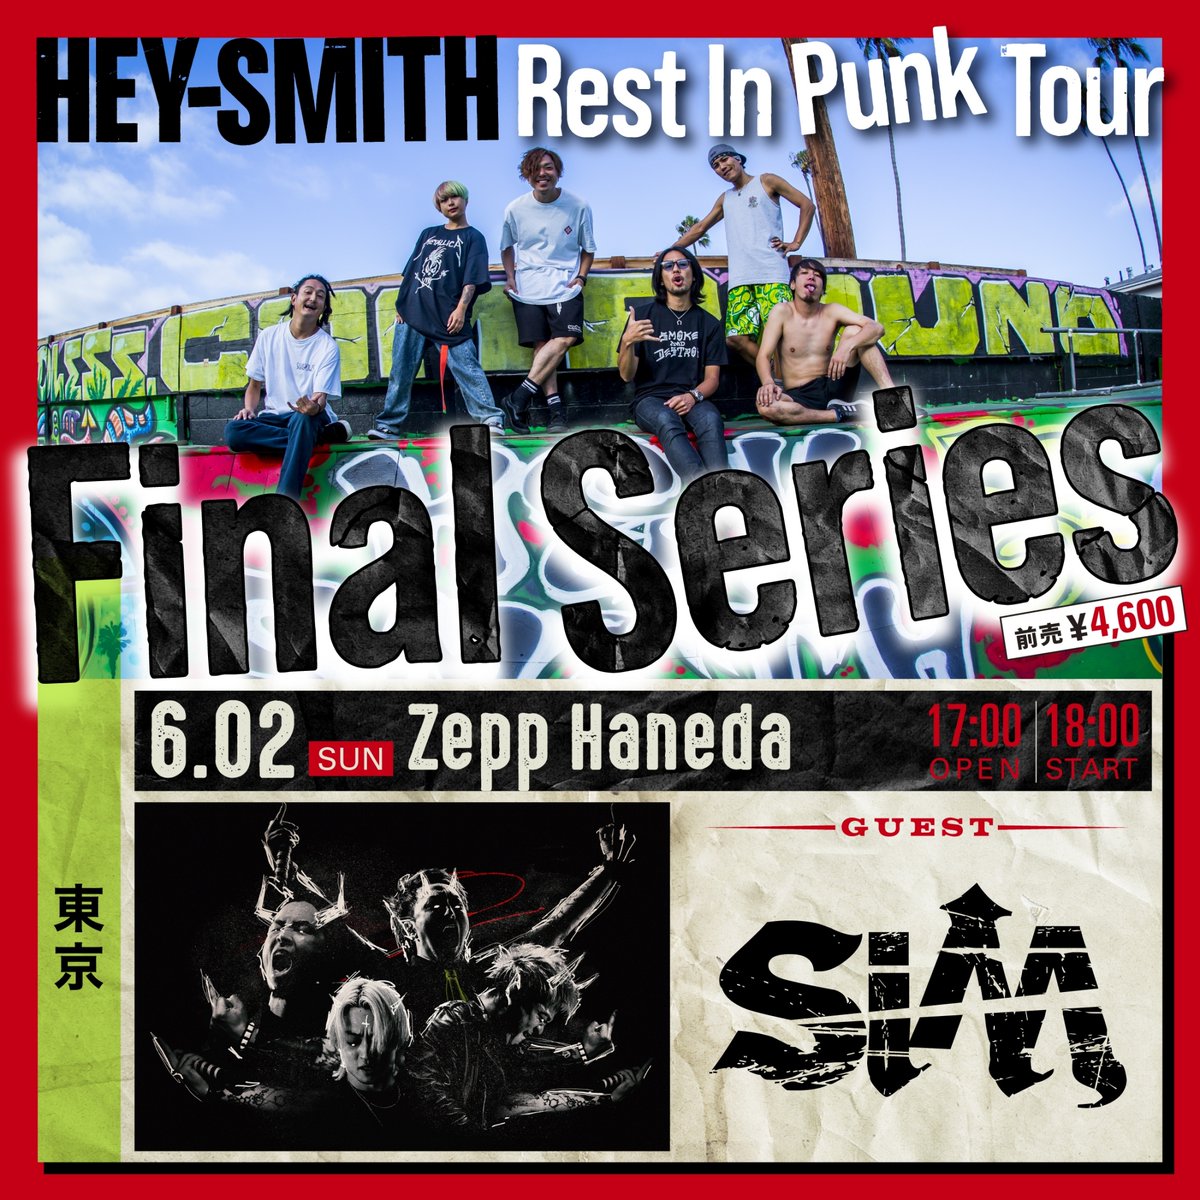 Rest In Punk Tour Final Series